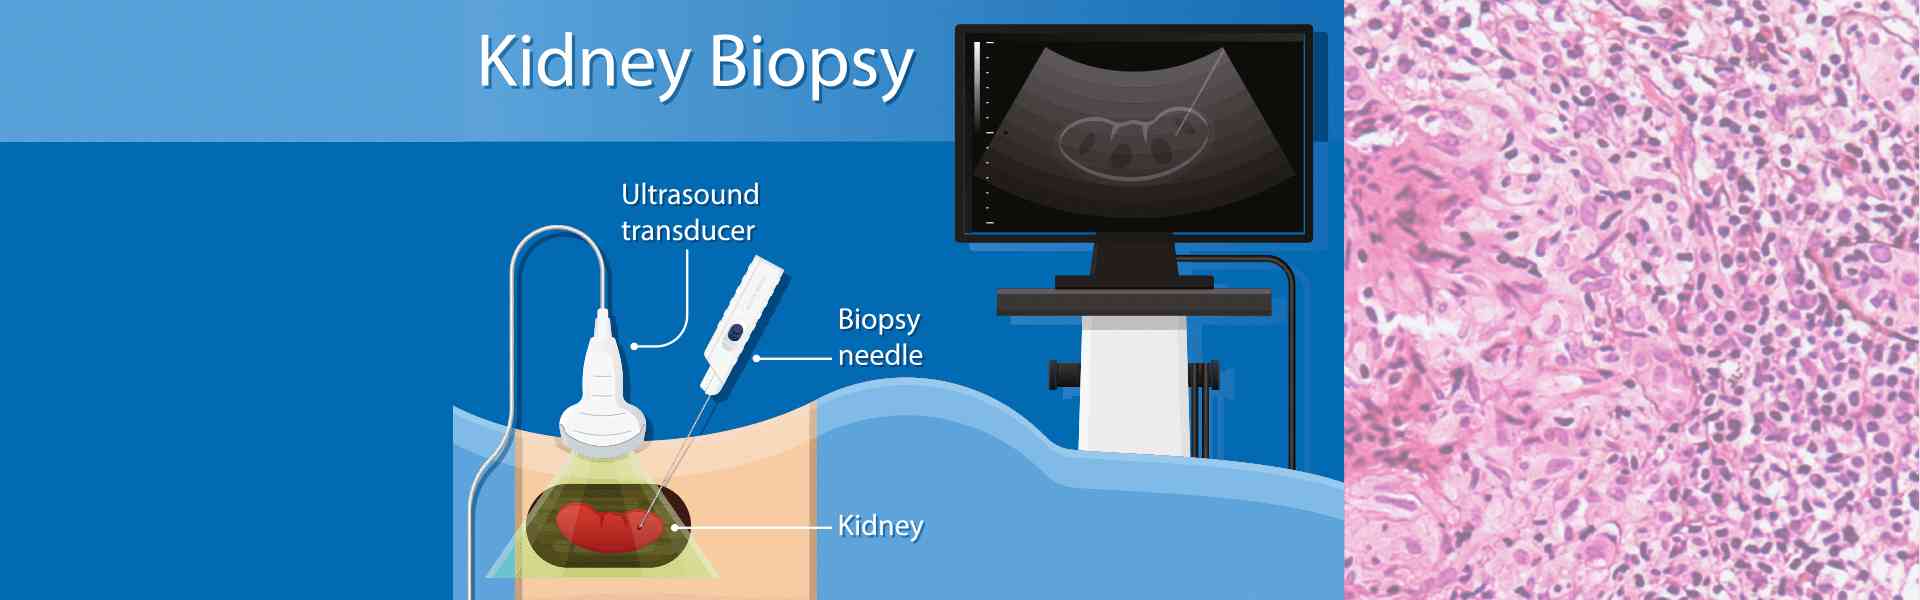 Kidney Biopsy Treatment in Gurugram